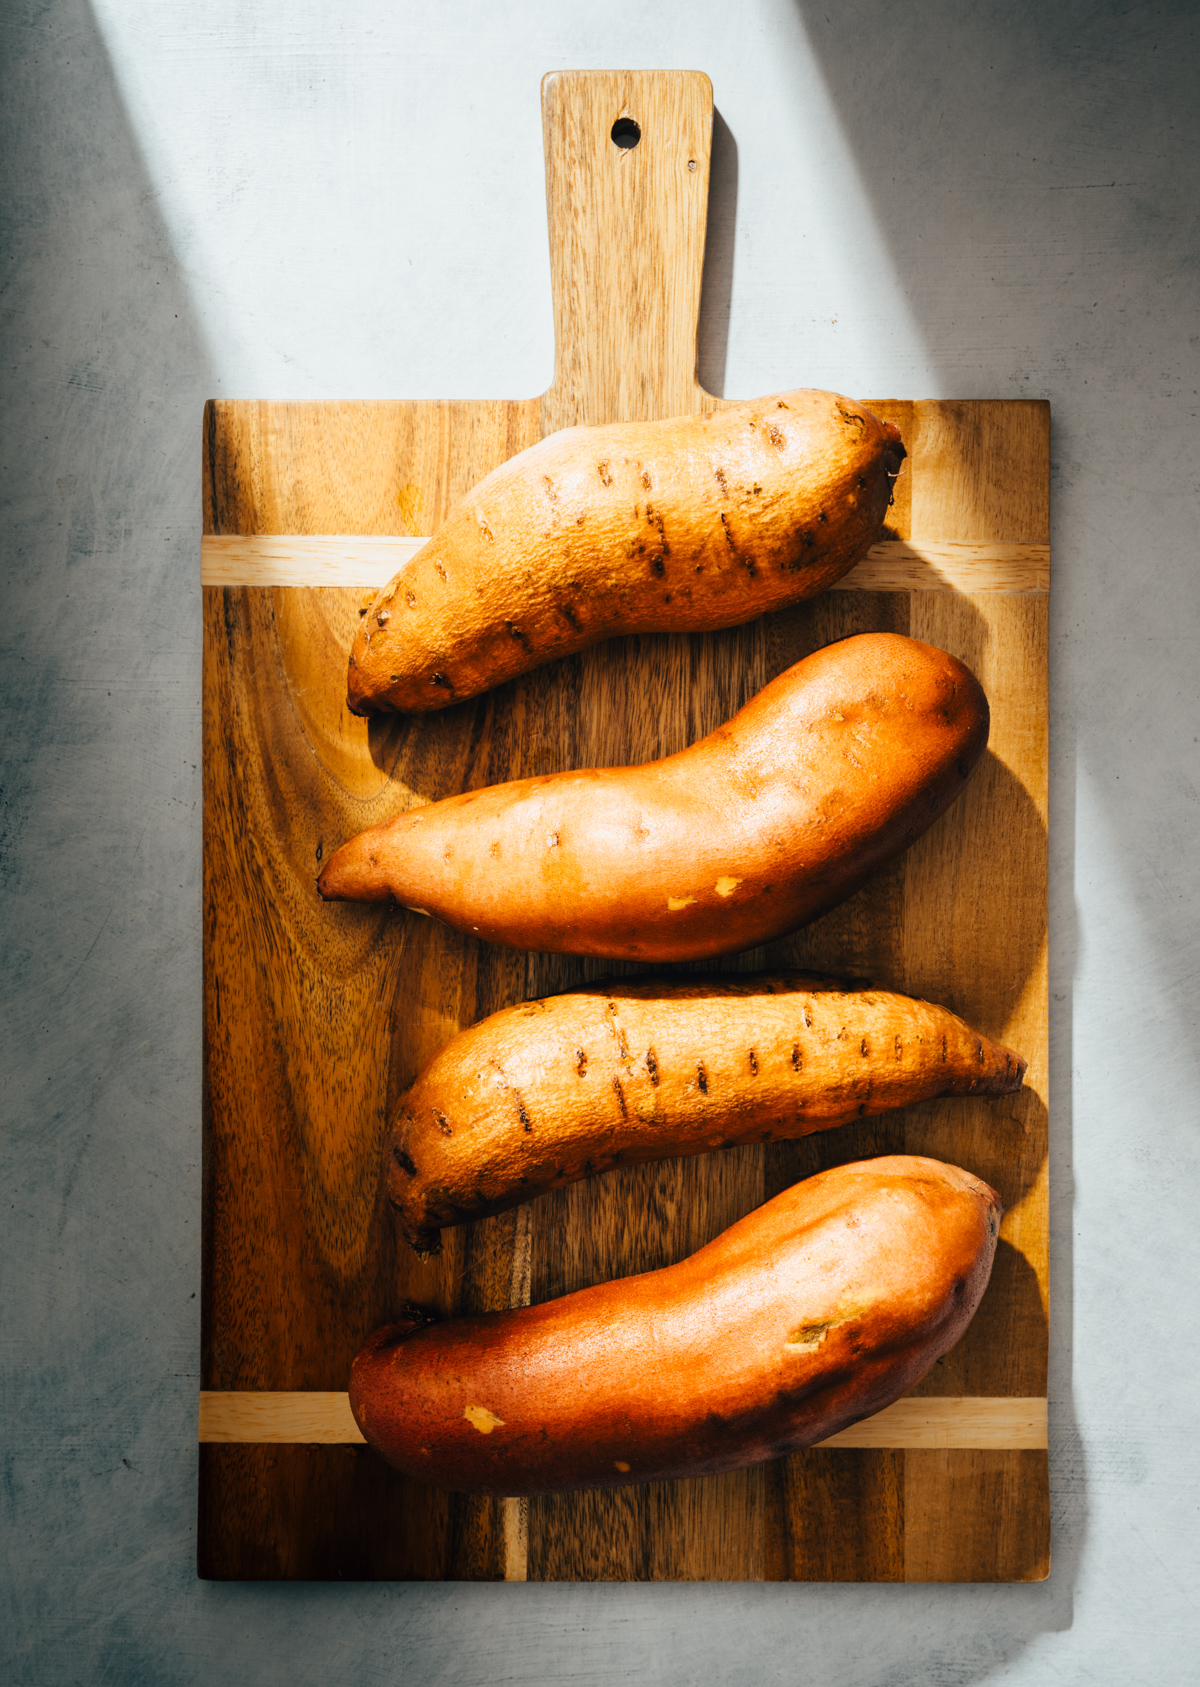 4 whole sweet potatoes on a wood cutting board